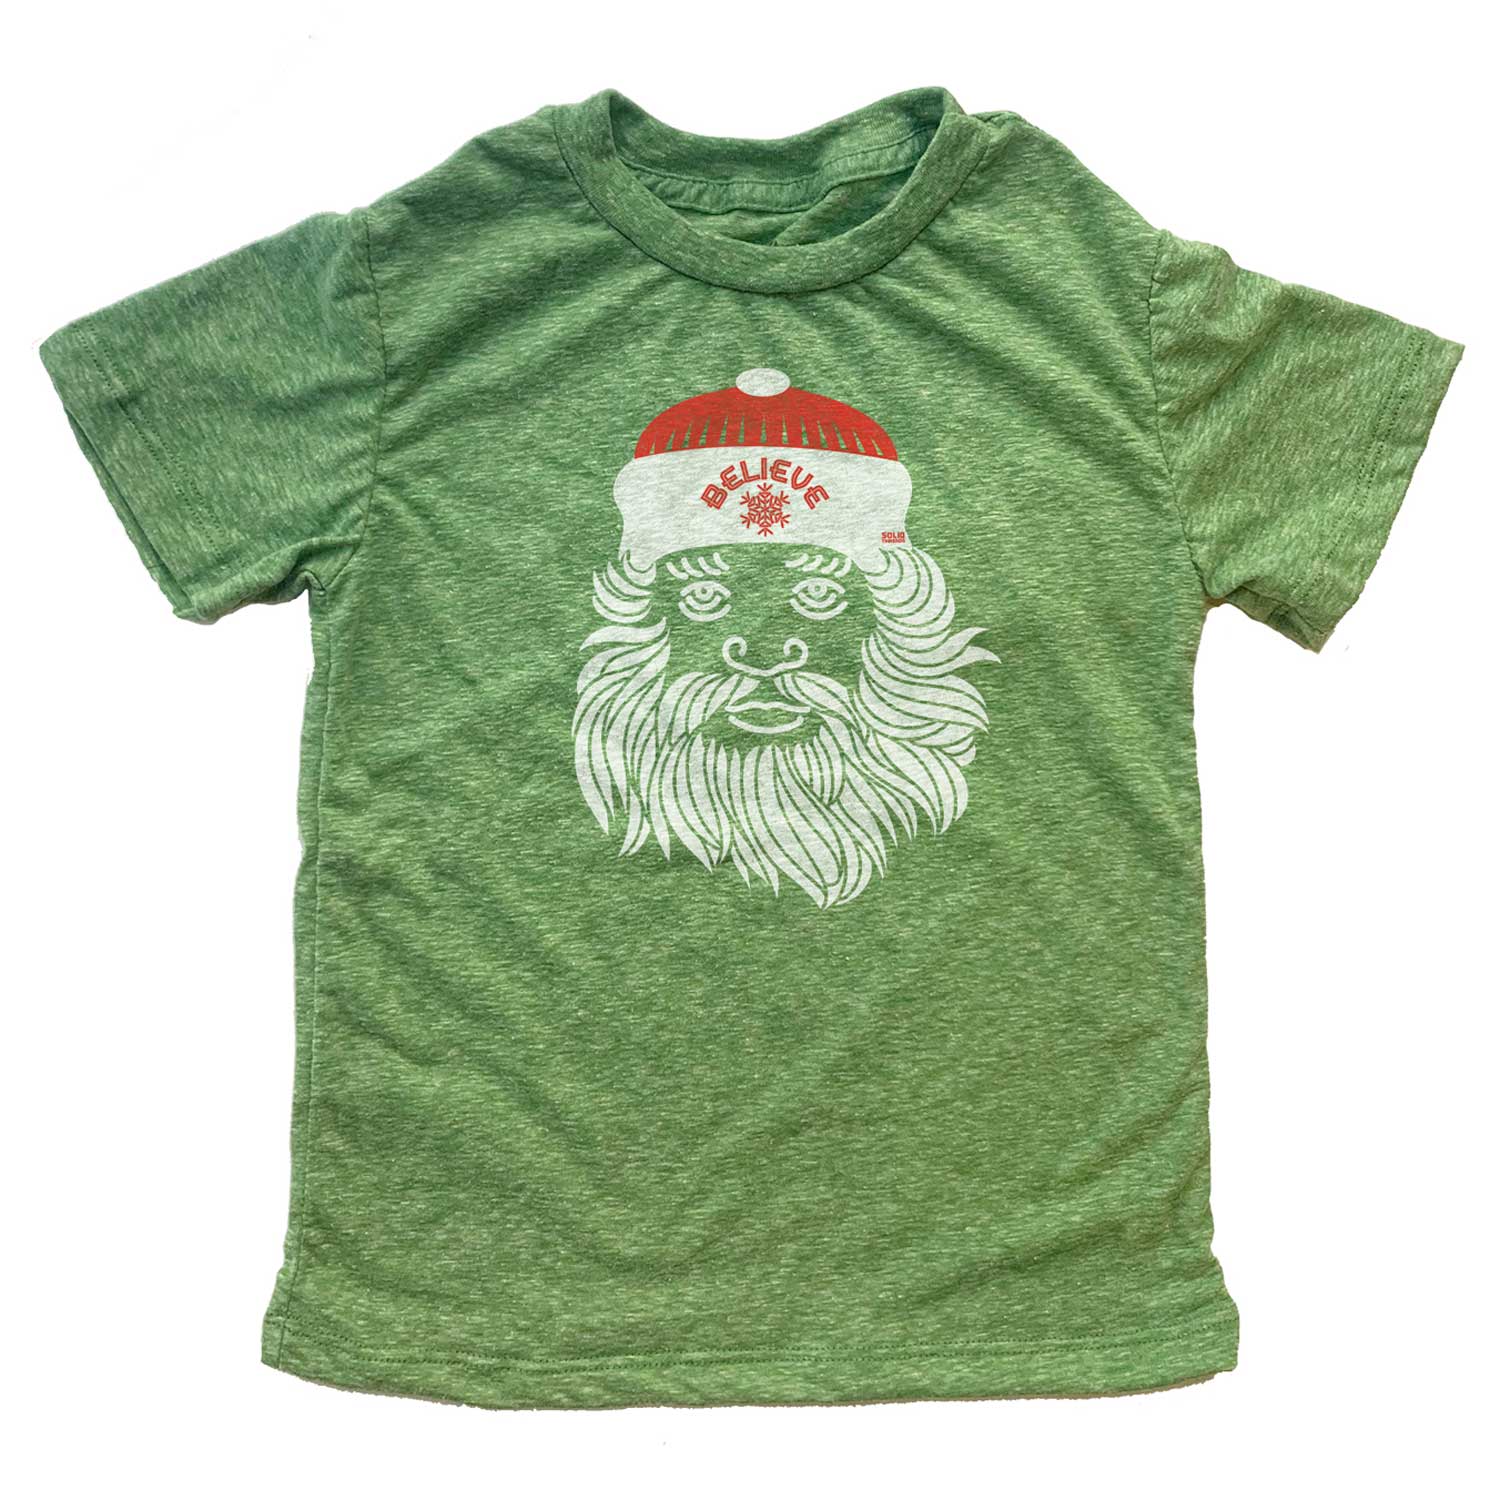 Kids Believe In Santa Cool Graphic T-Shirt | Retro Christmas Spirit Soft Tee | Solid Threads